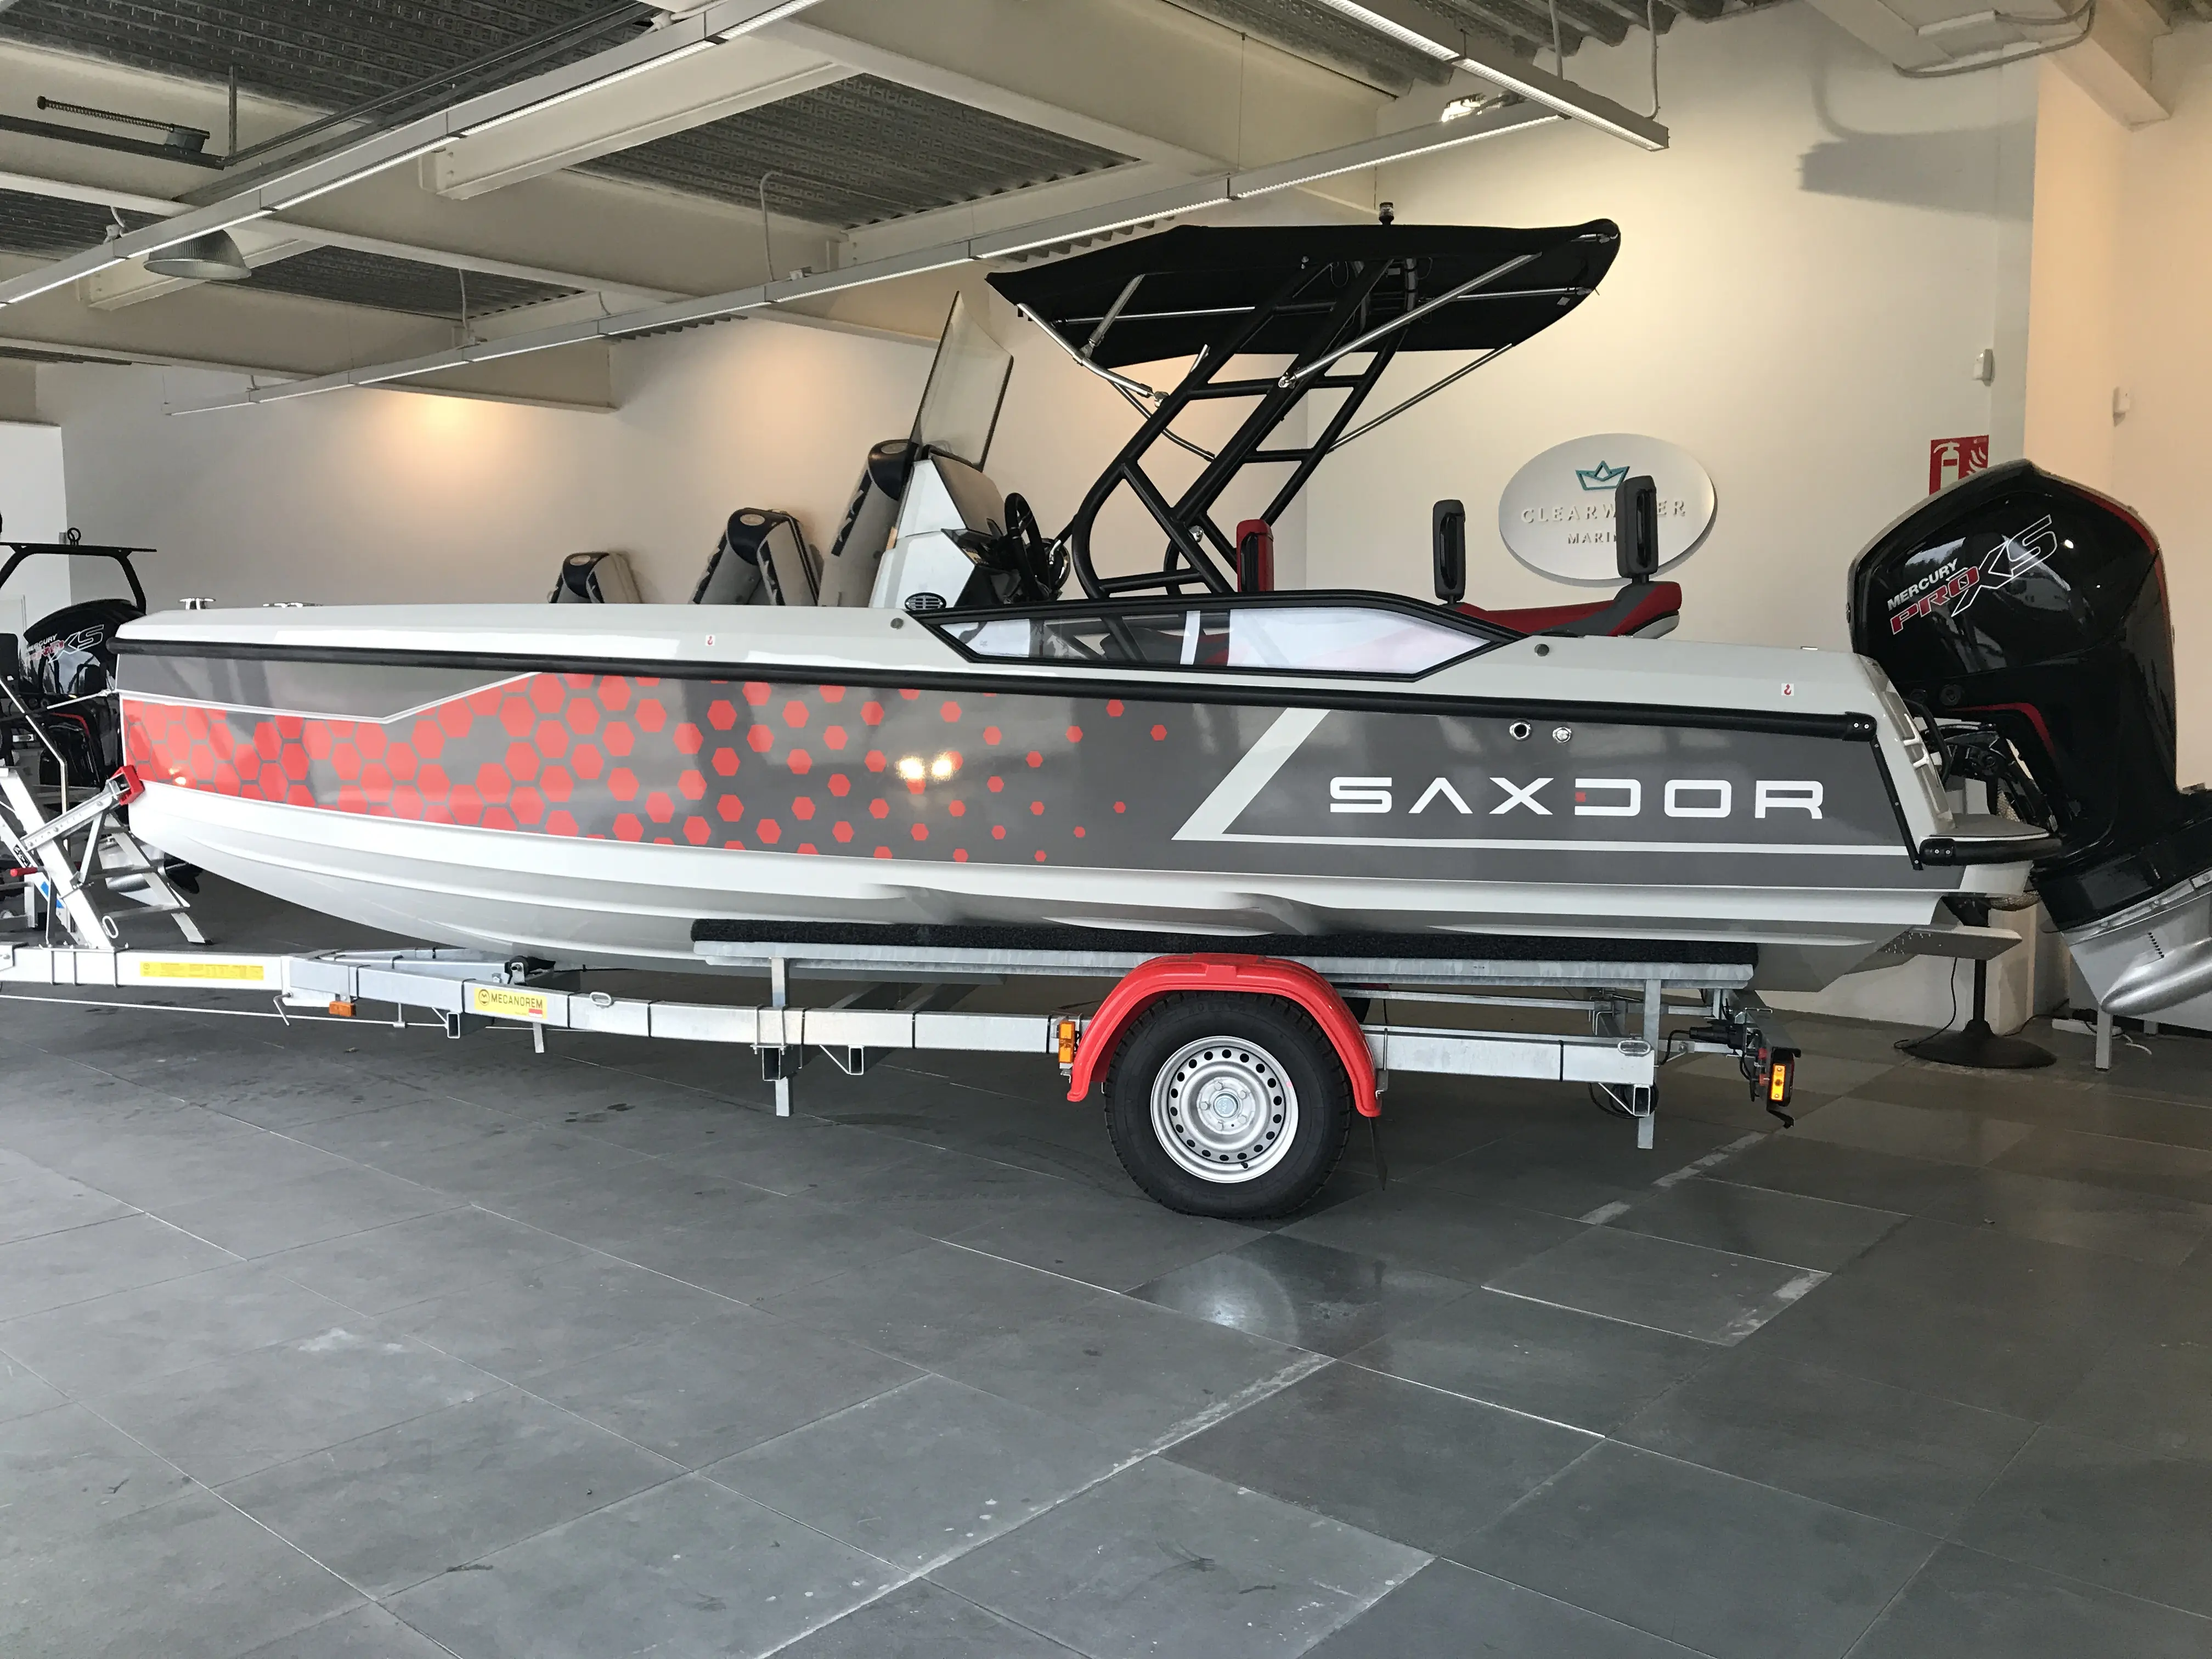 Saxdor 200 Pro Sport